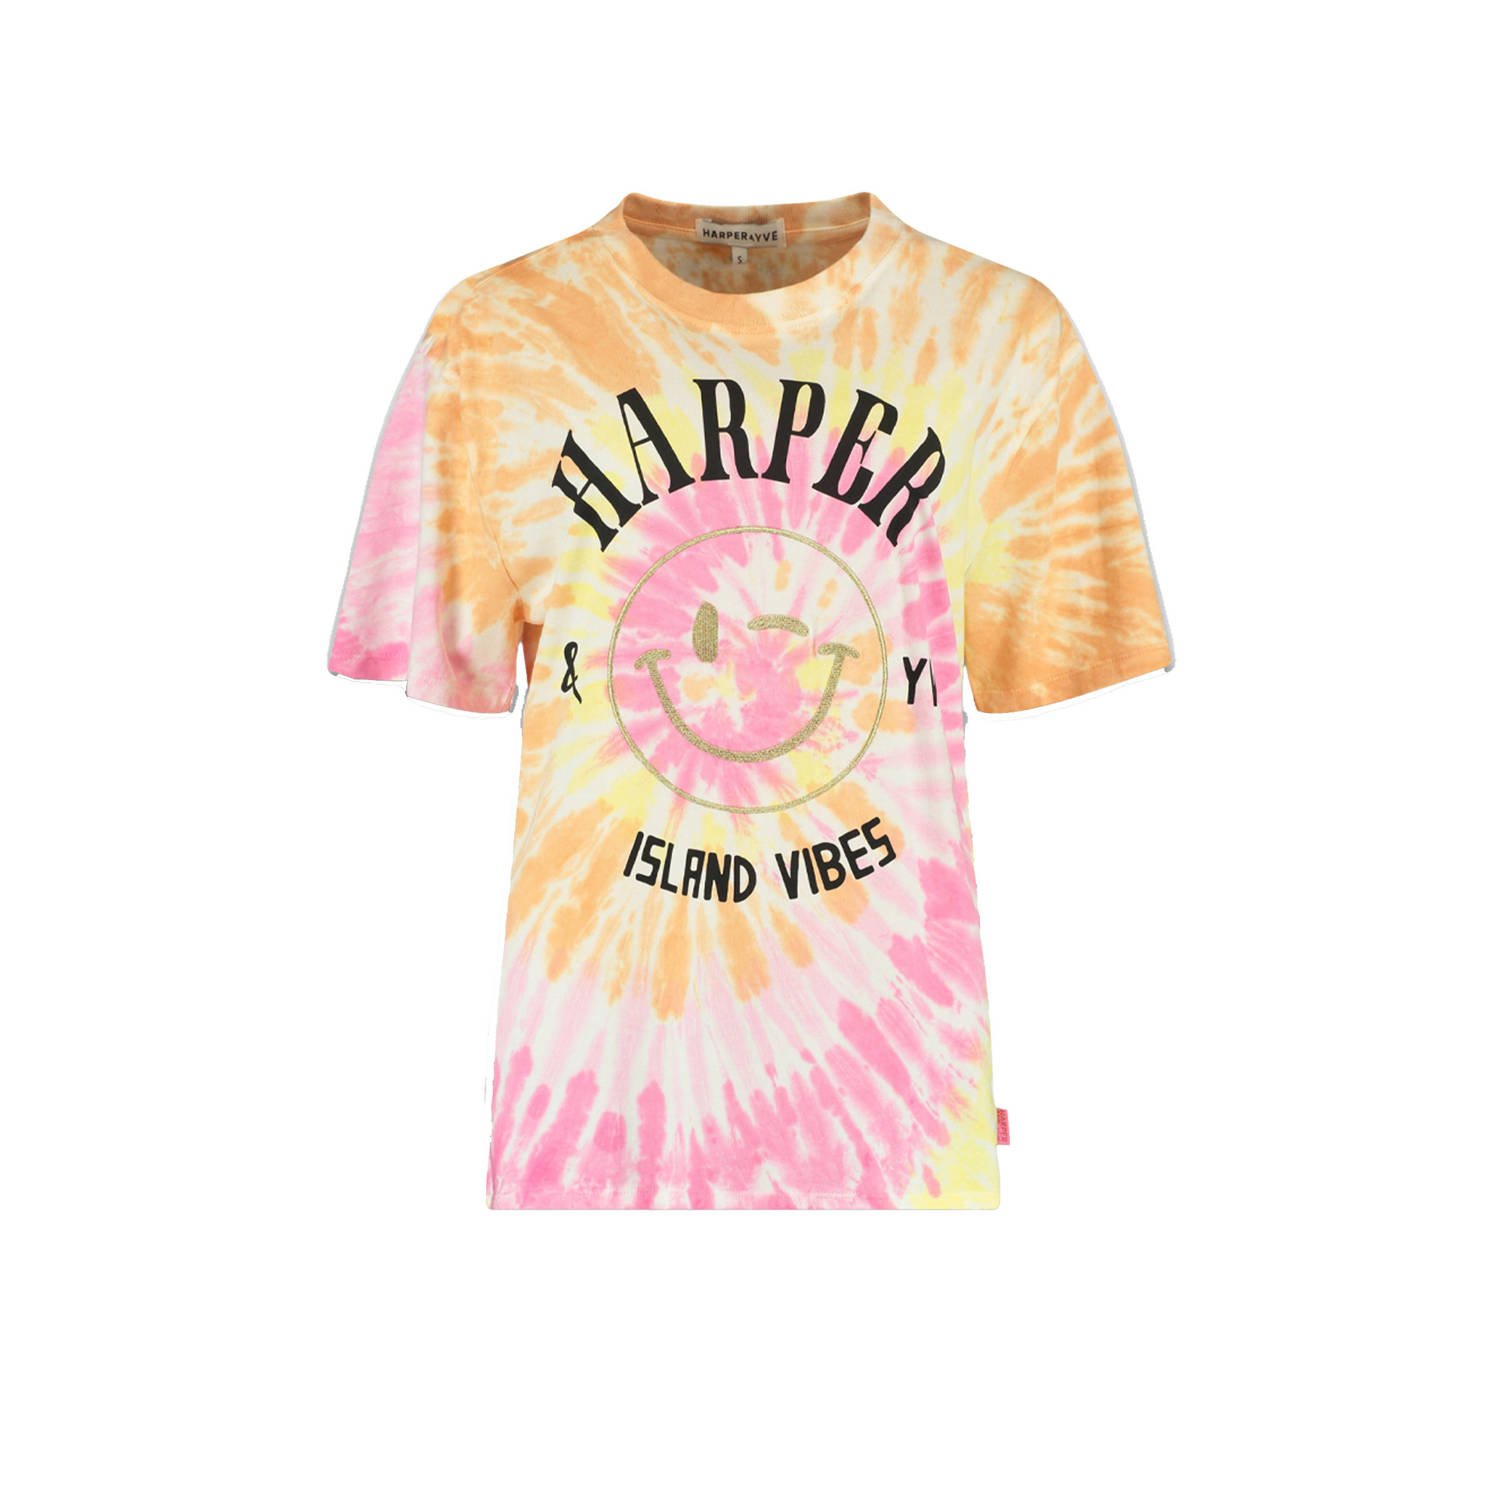 HARPER & YVE tie-dye t-shirt SWIRL met printopdruk roze oranje geel